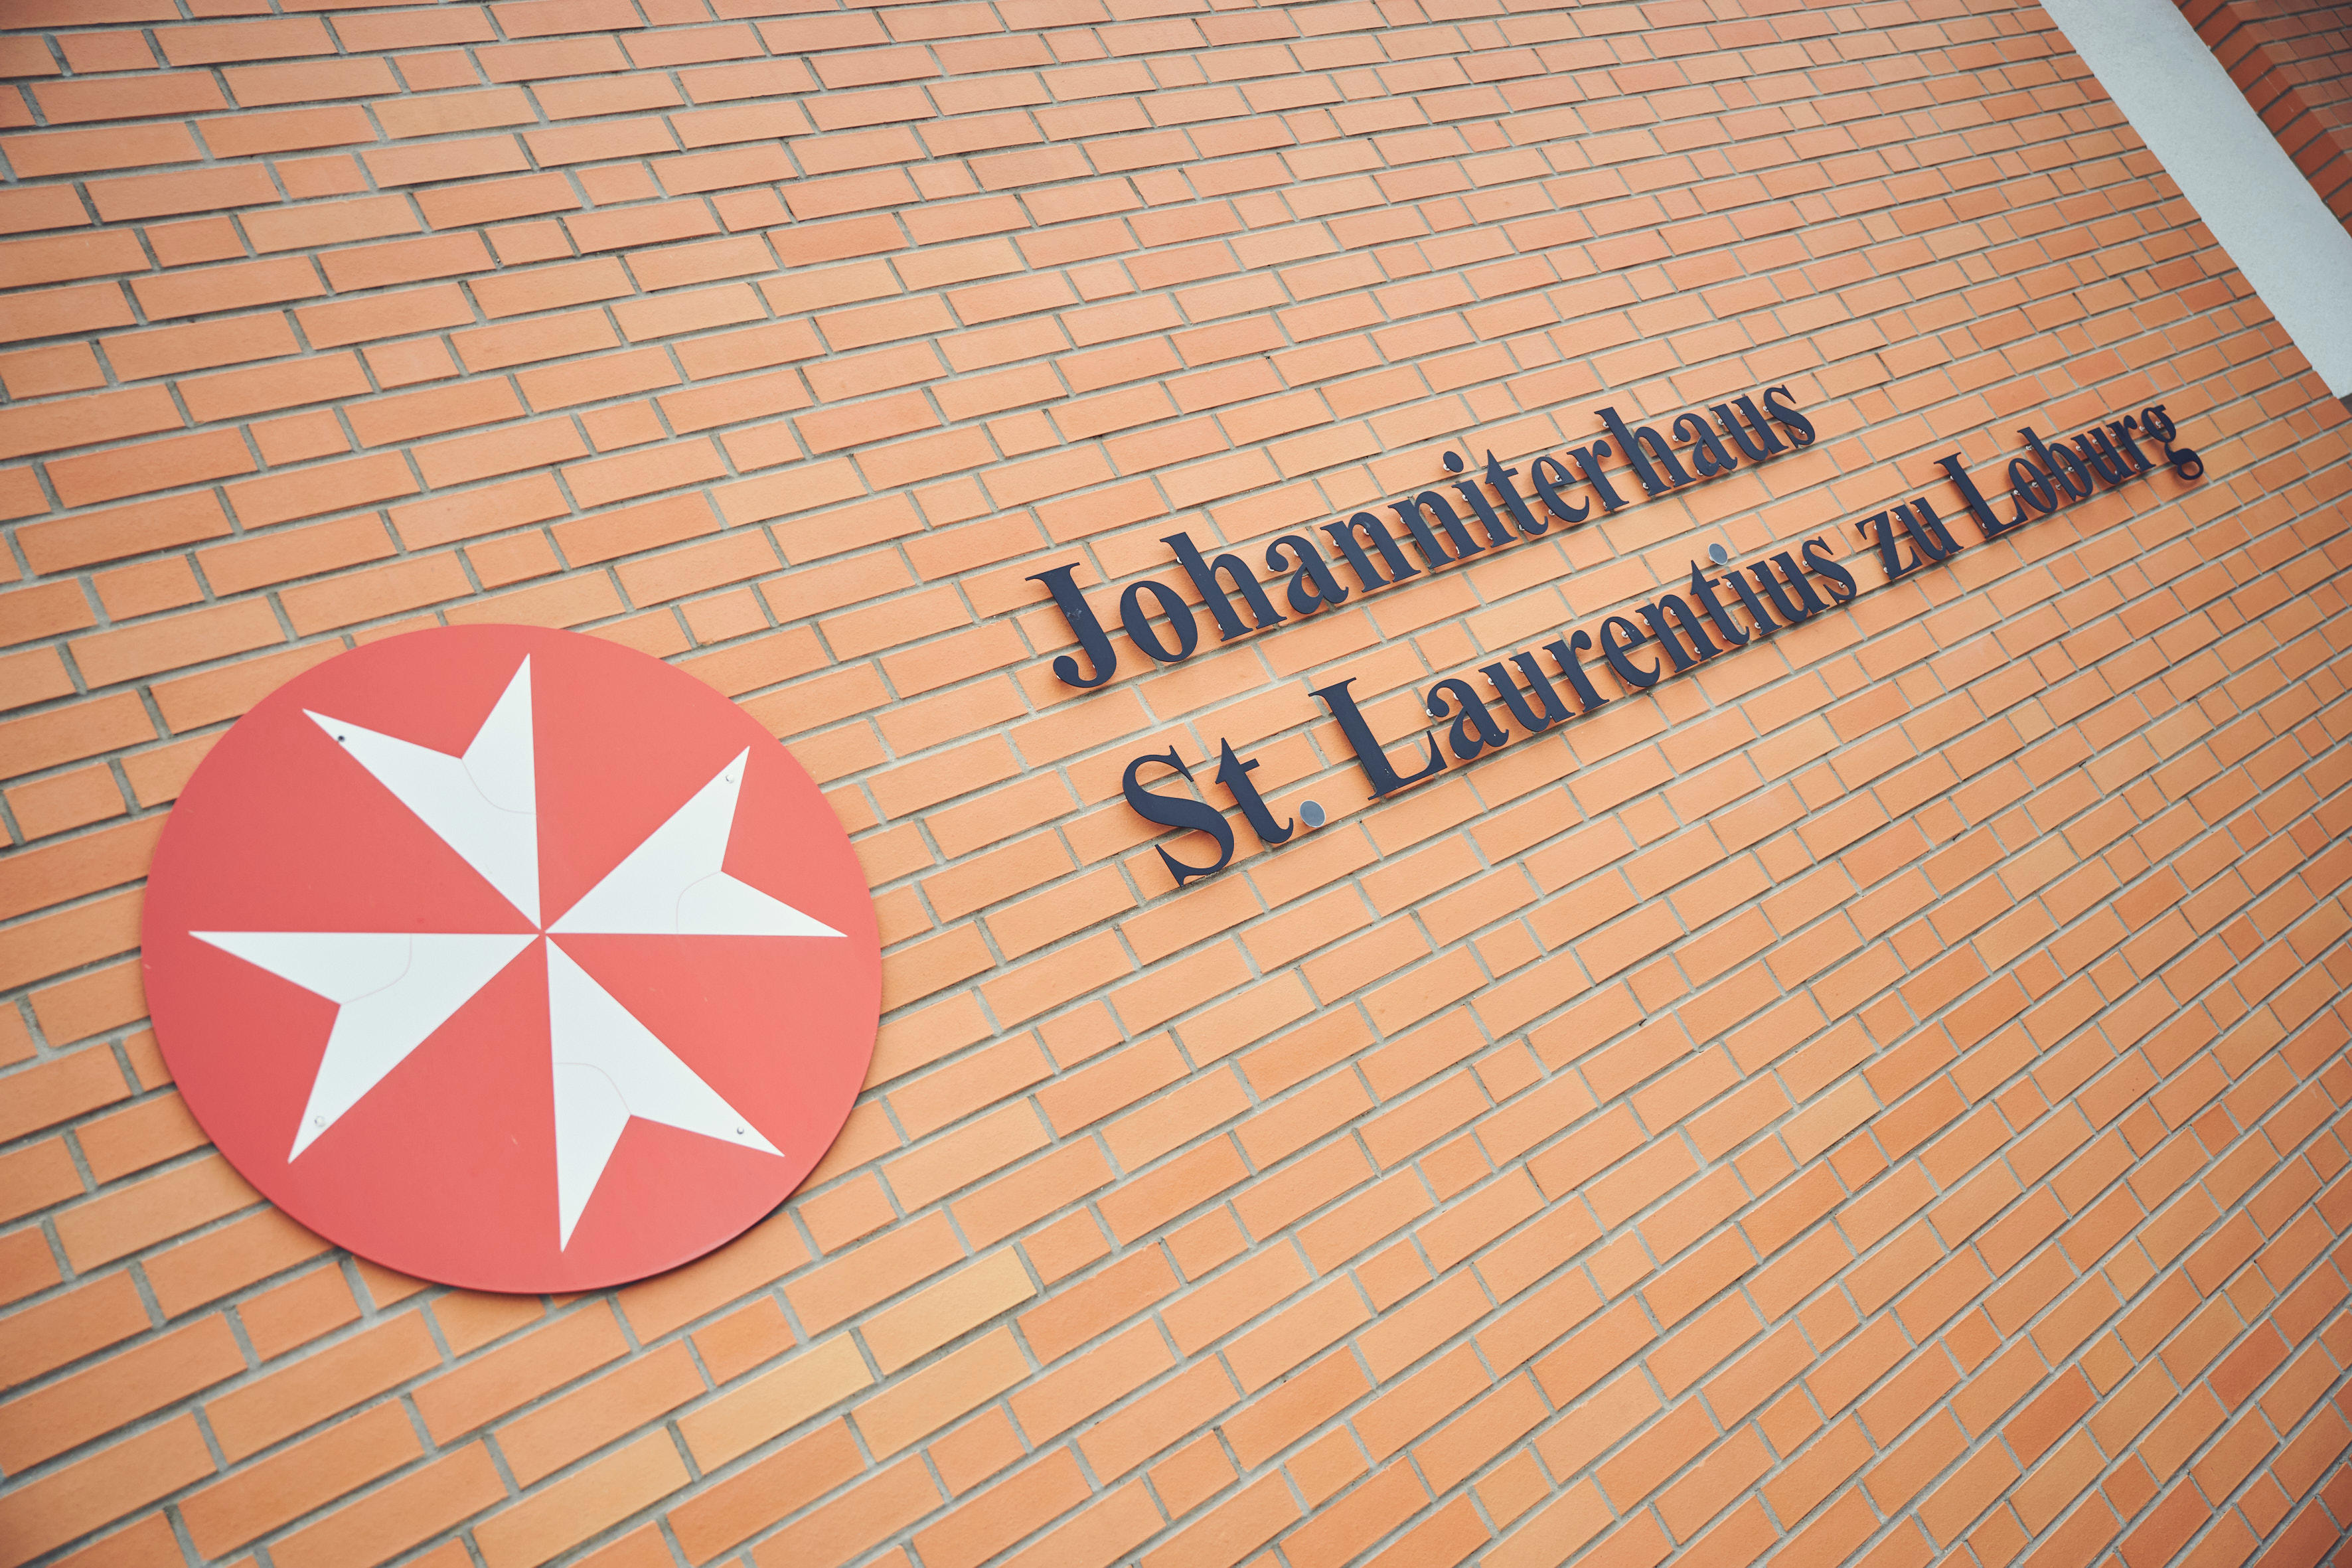 Bild 5 Johanniterhaus St. Laurentius zu Loburg in Loburg